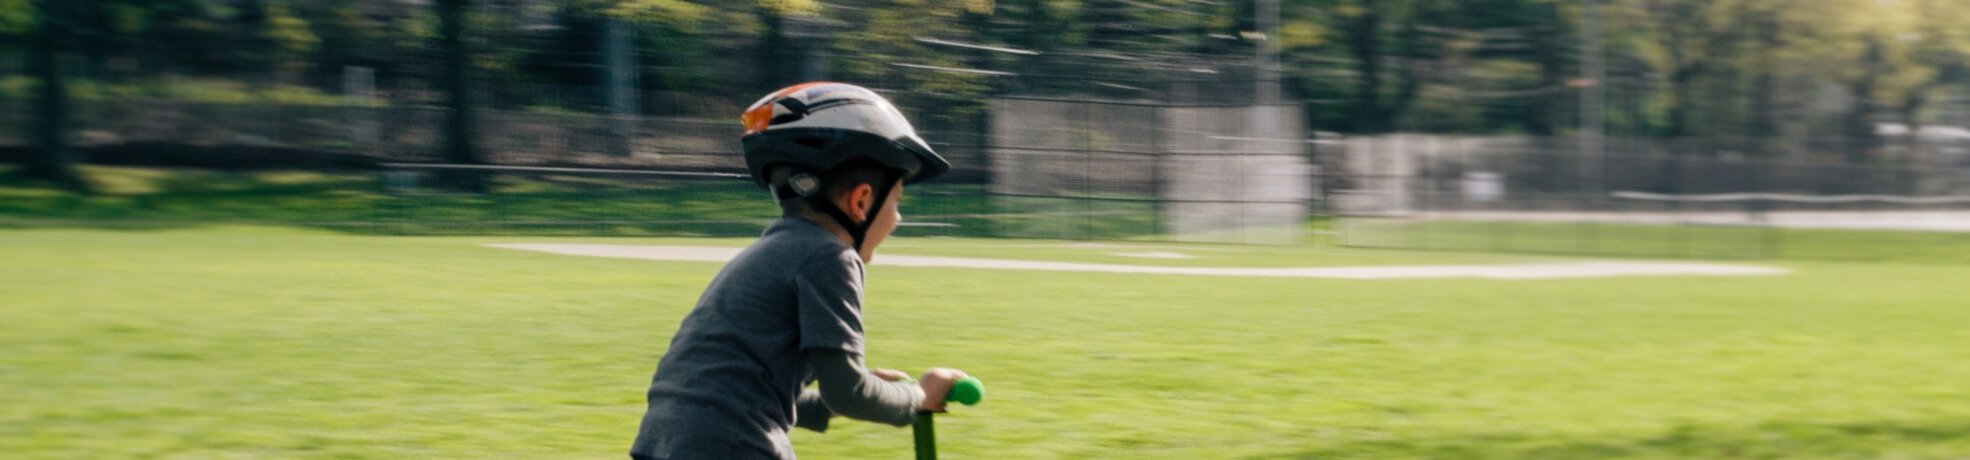 Skate & Scooter Helmets